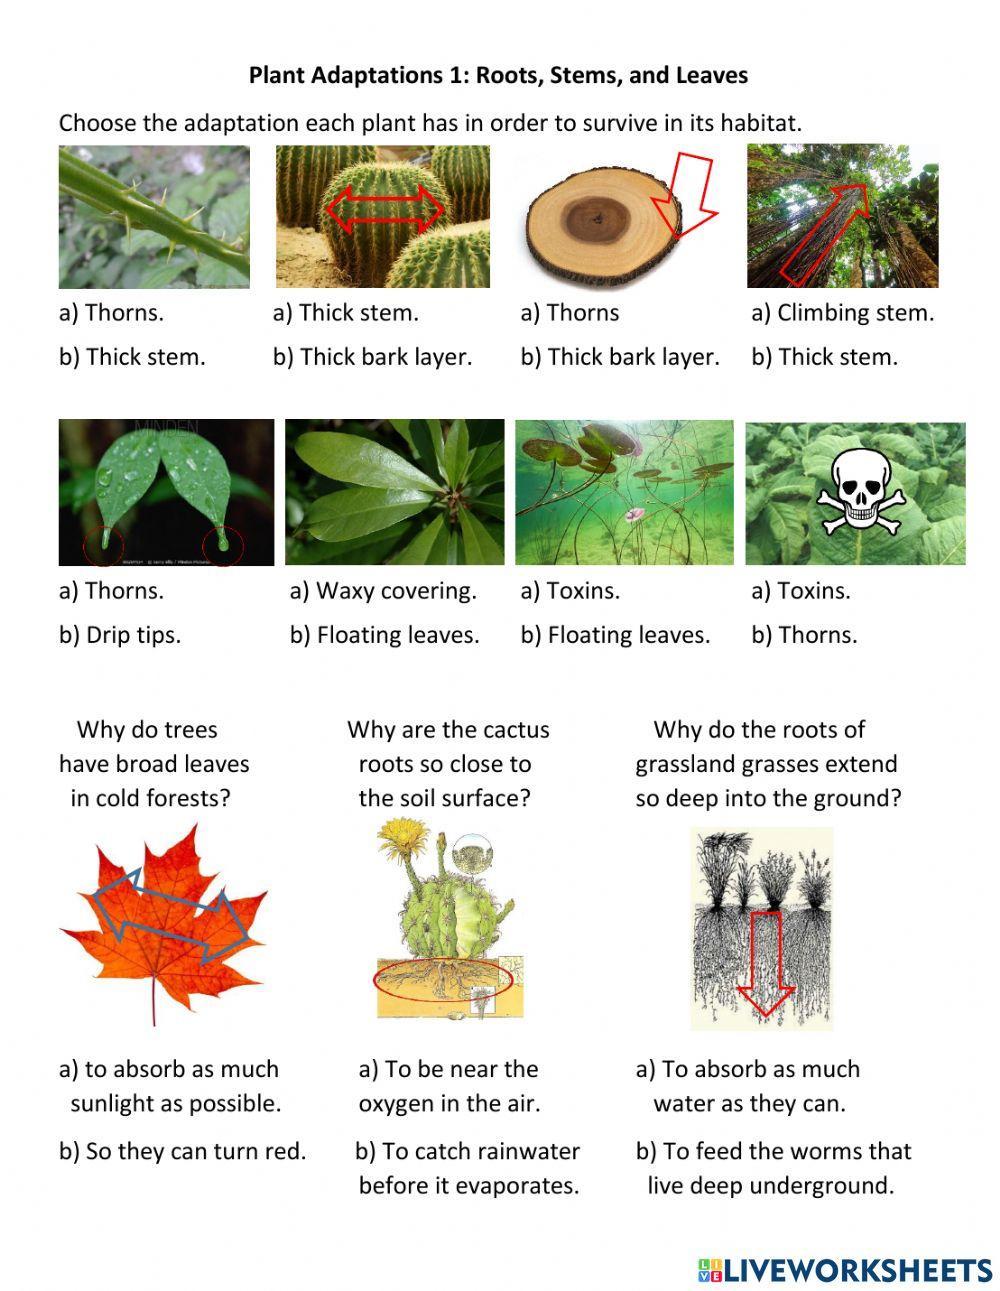 Plant adaptations 1